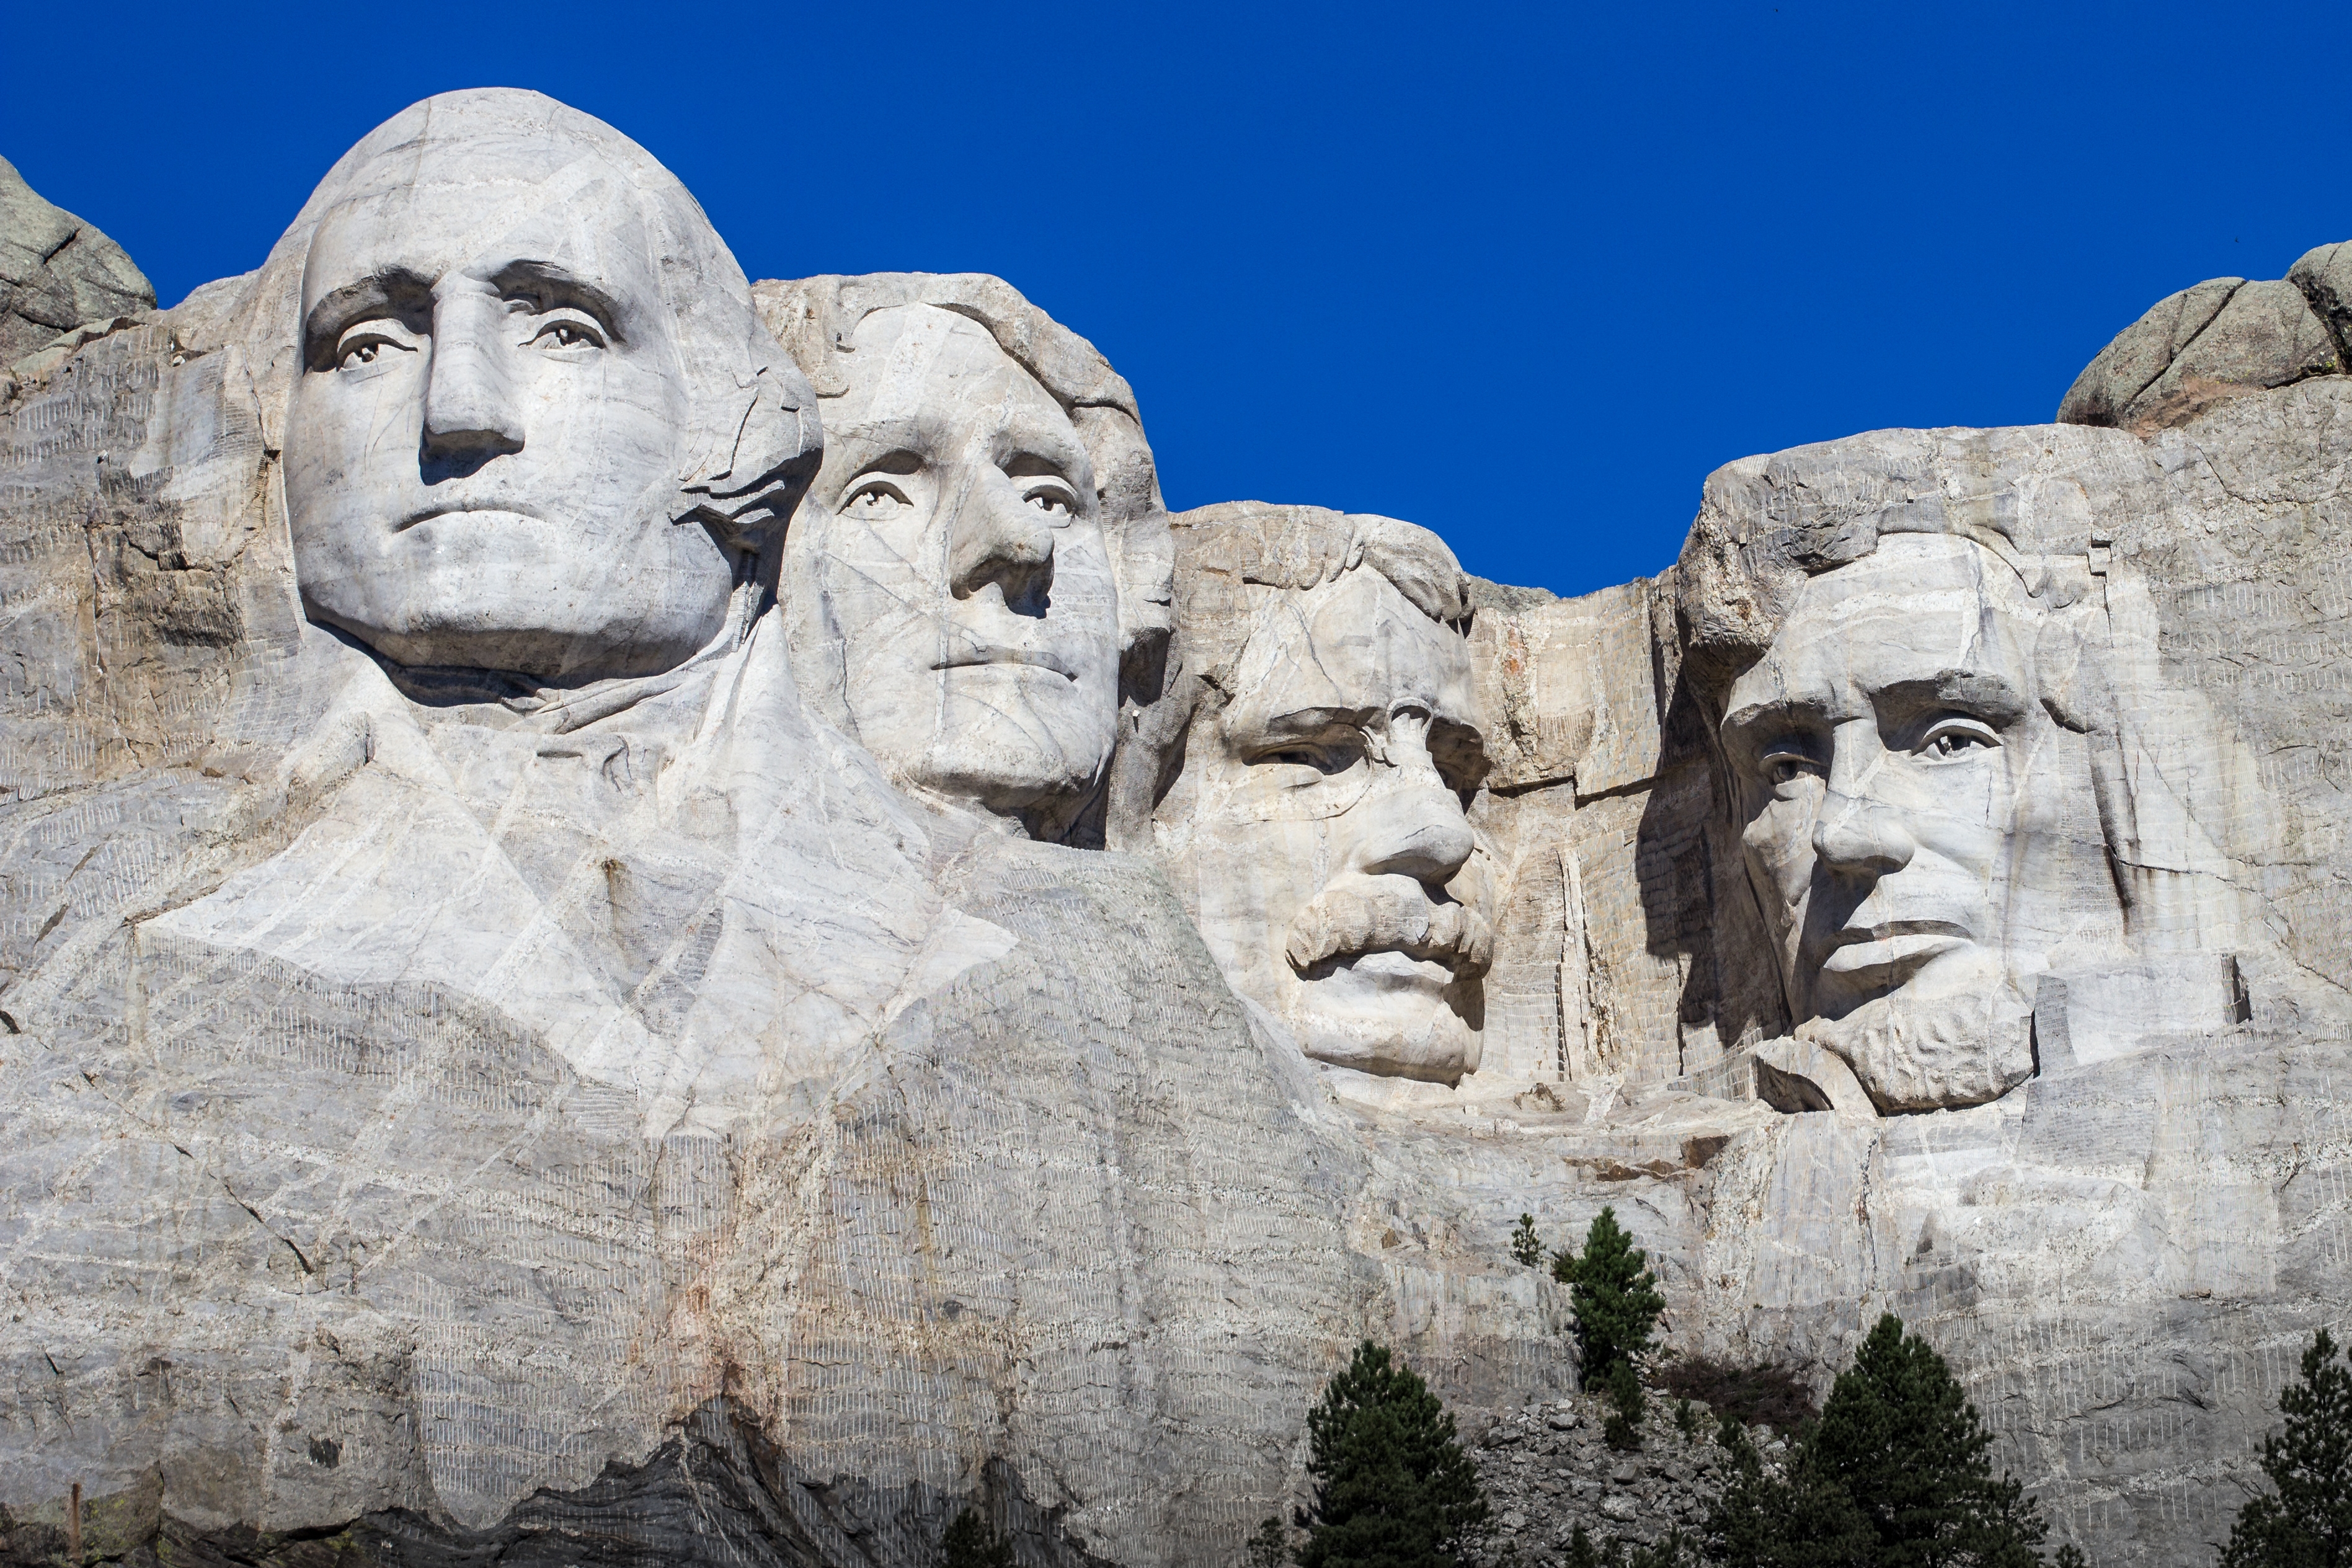 HD wallpaper, South Dakota, Mount Rushmore, Thomas Jefferson, George Washington, Black Hills, Presidents, Theodore Roosevelt, Blue Sky, Abraham Lincoln